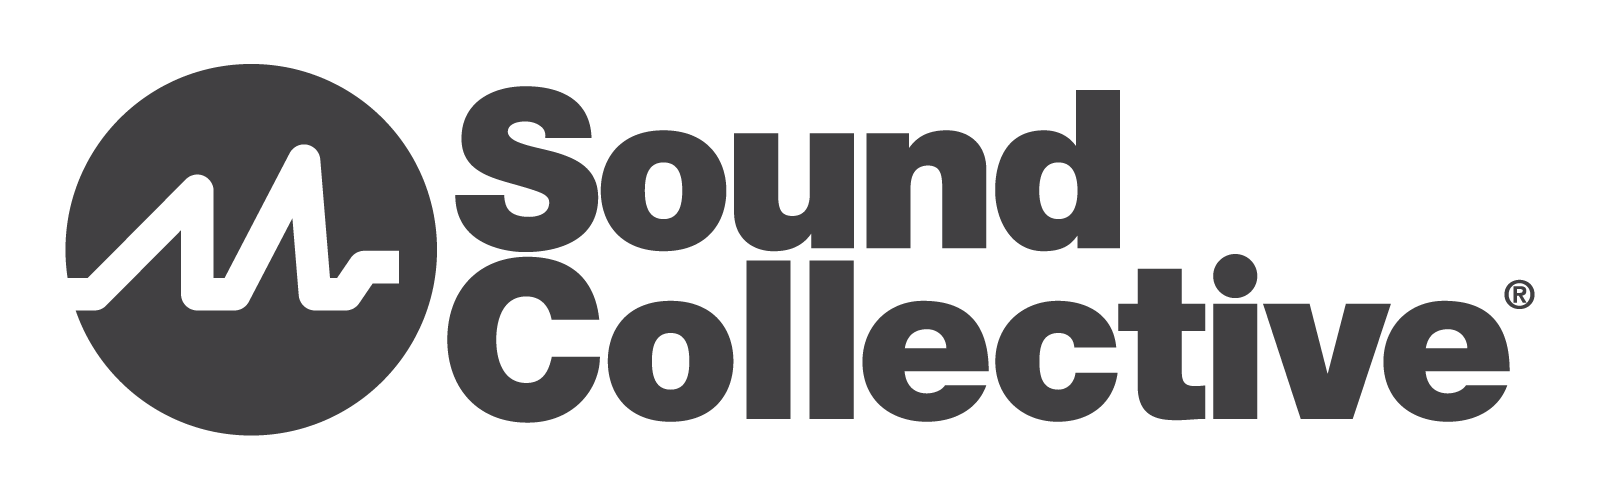 Sound Collective,SoundCollective,collective school of music,Community,sound better, Bundles, SoundCollective